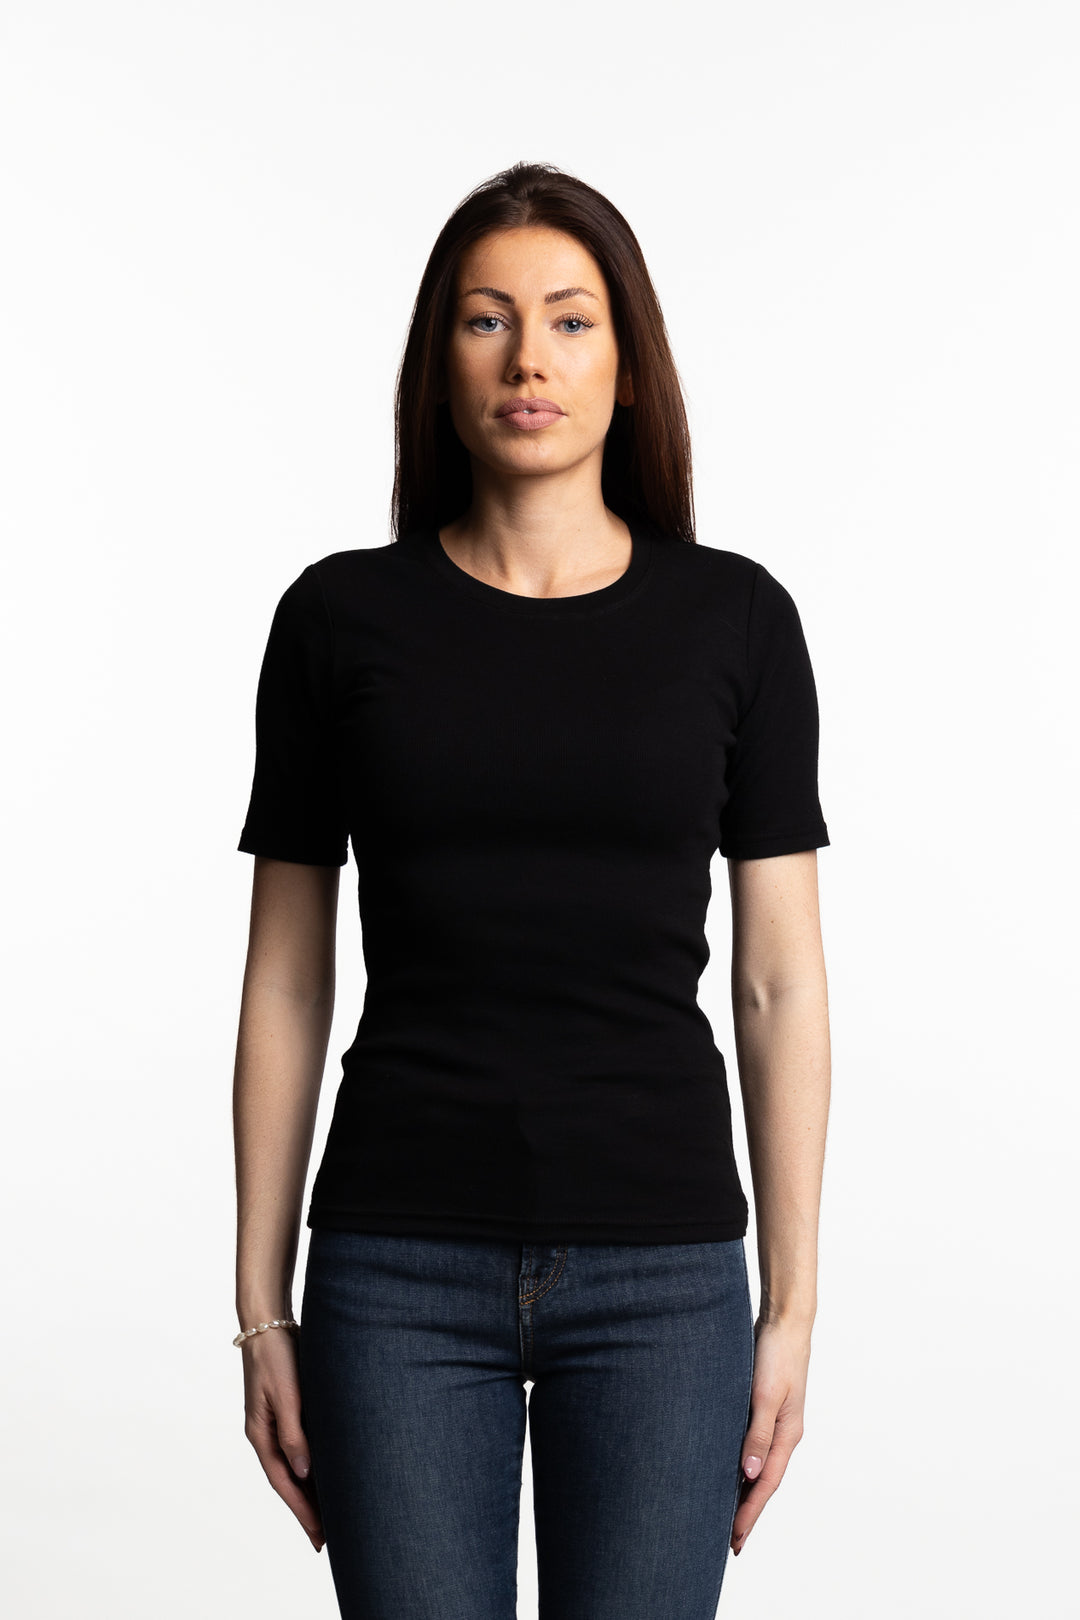 Saalexo T-Shirt 7542- Black